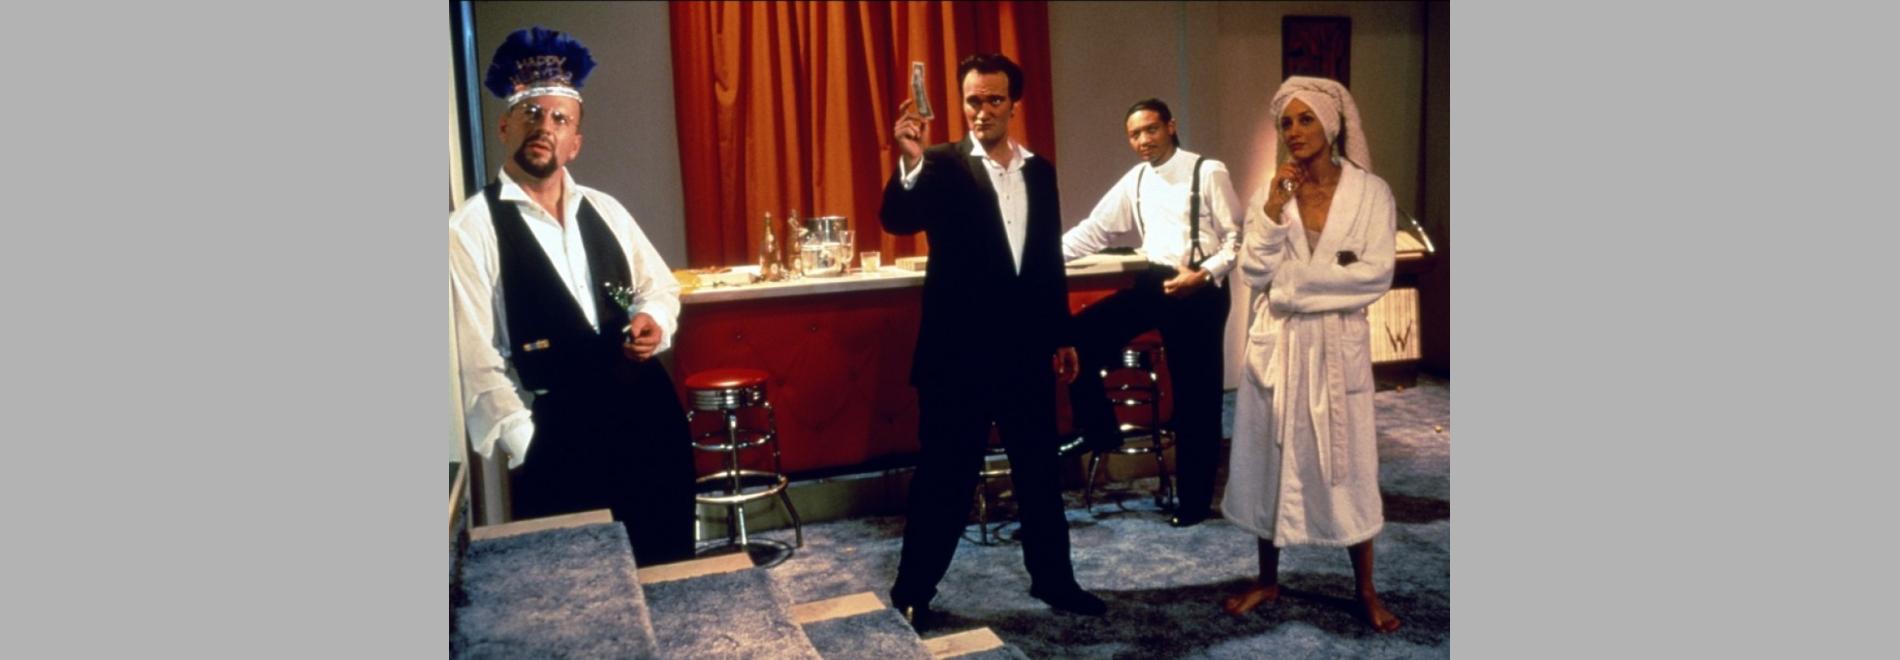 Four Rooms (Allison Anders, Alexandre Rockwell, Robert Rodríguez, Quentin Tarantino, 1995)